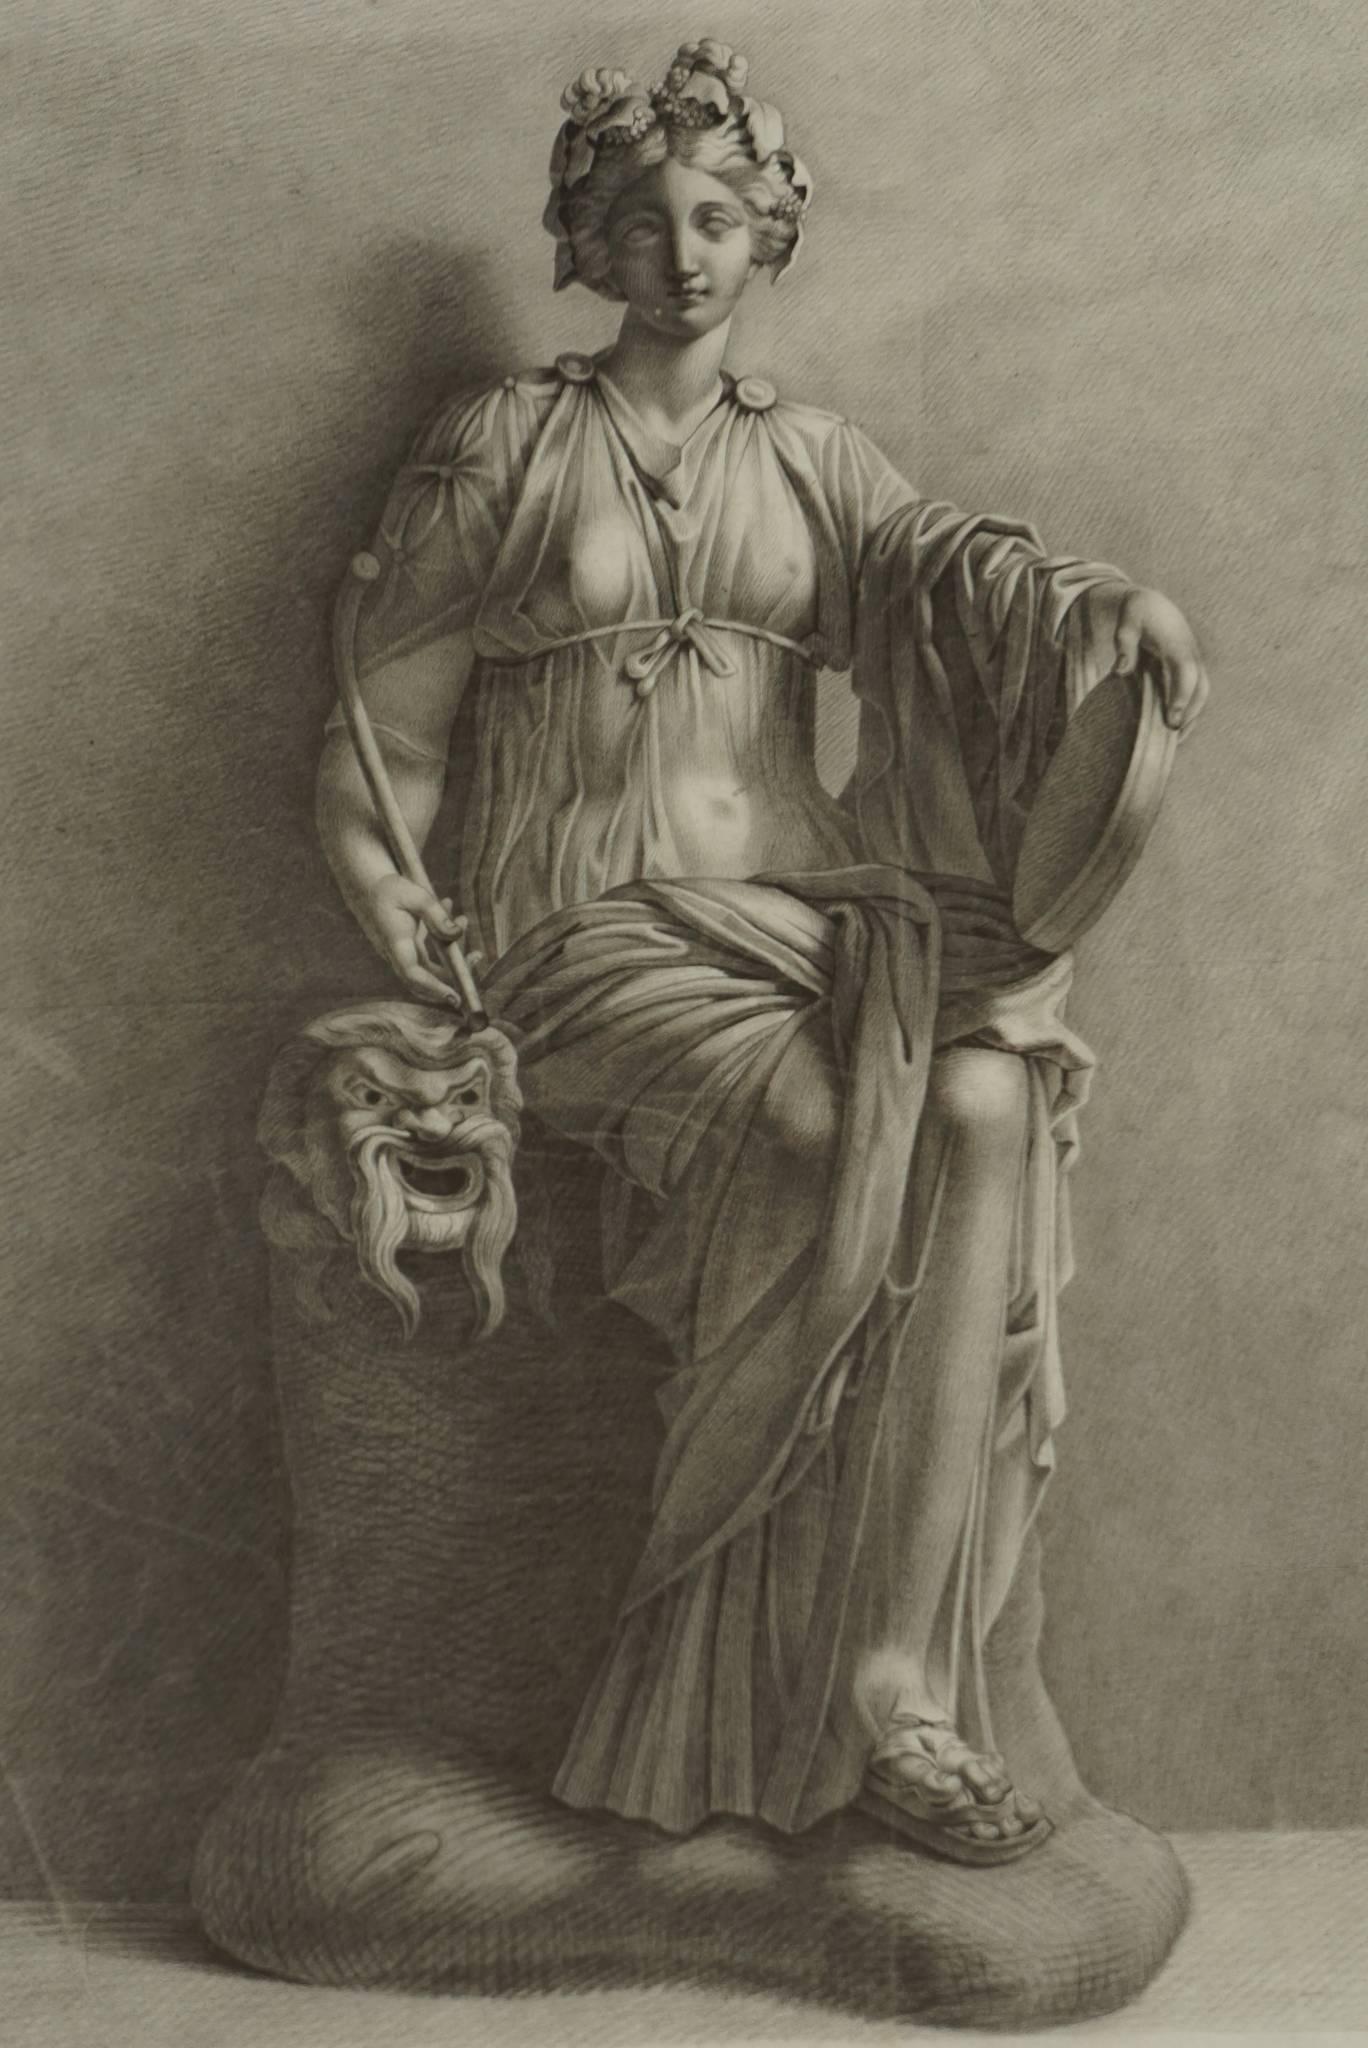 19th century charcoal portraits